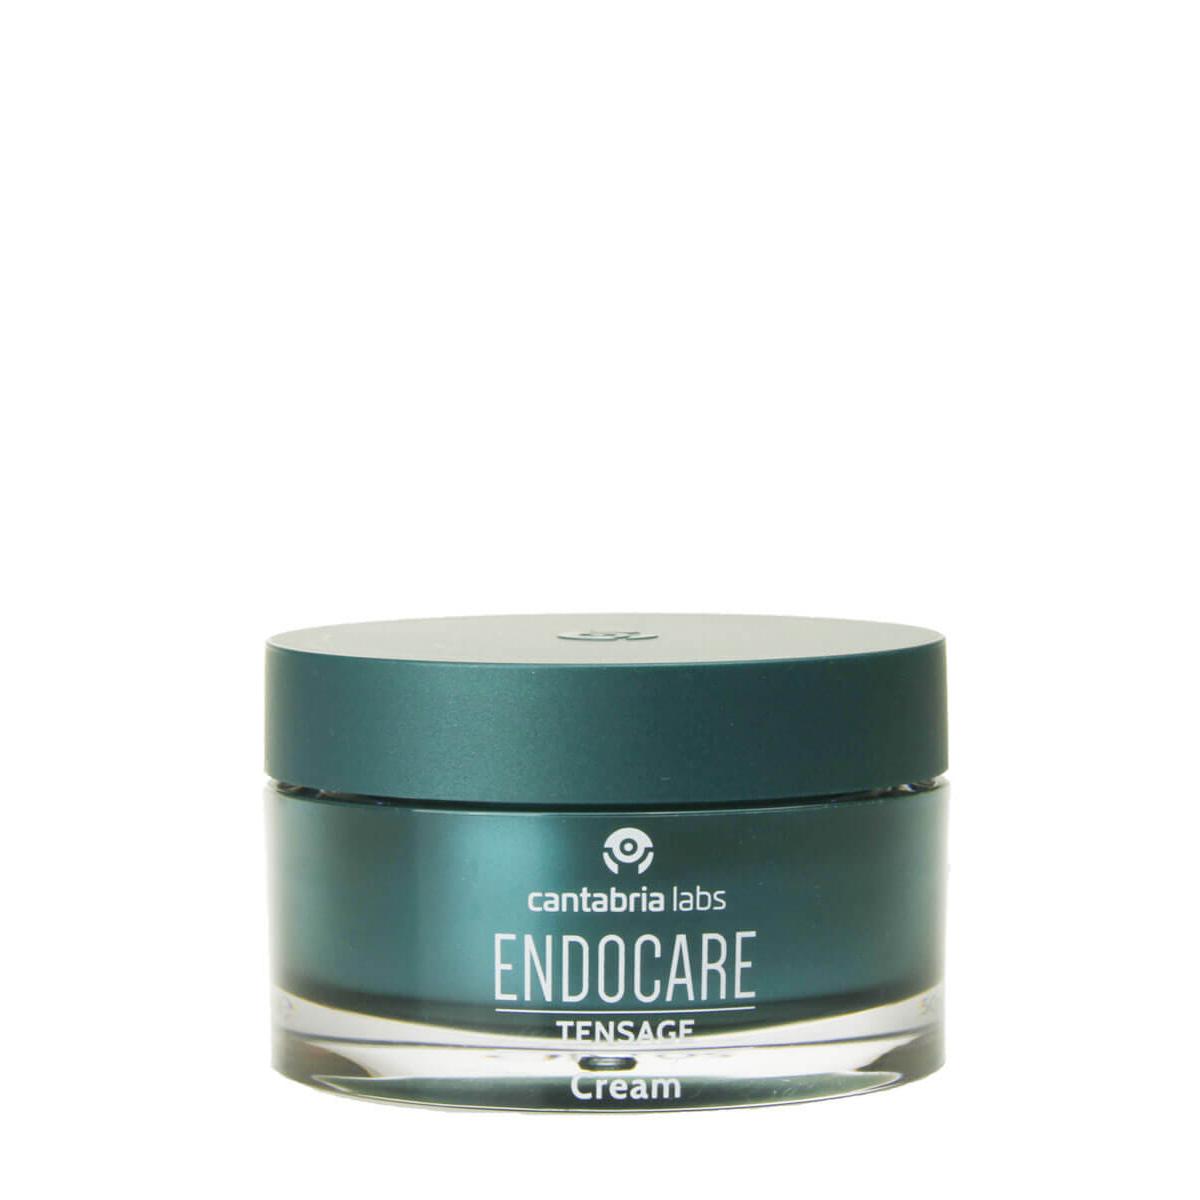 Endocare - Endocare tensage cream 50 ml